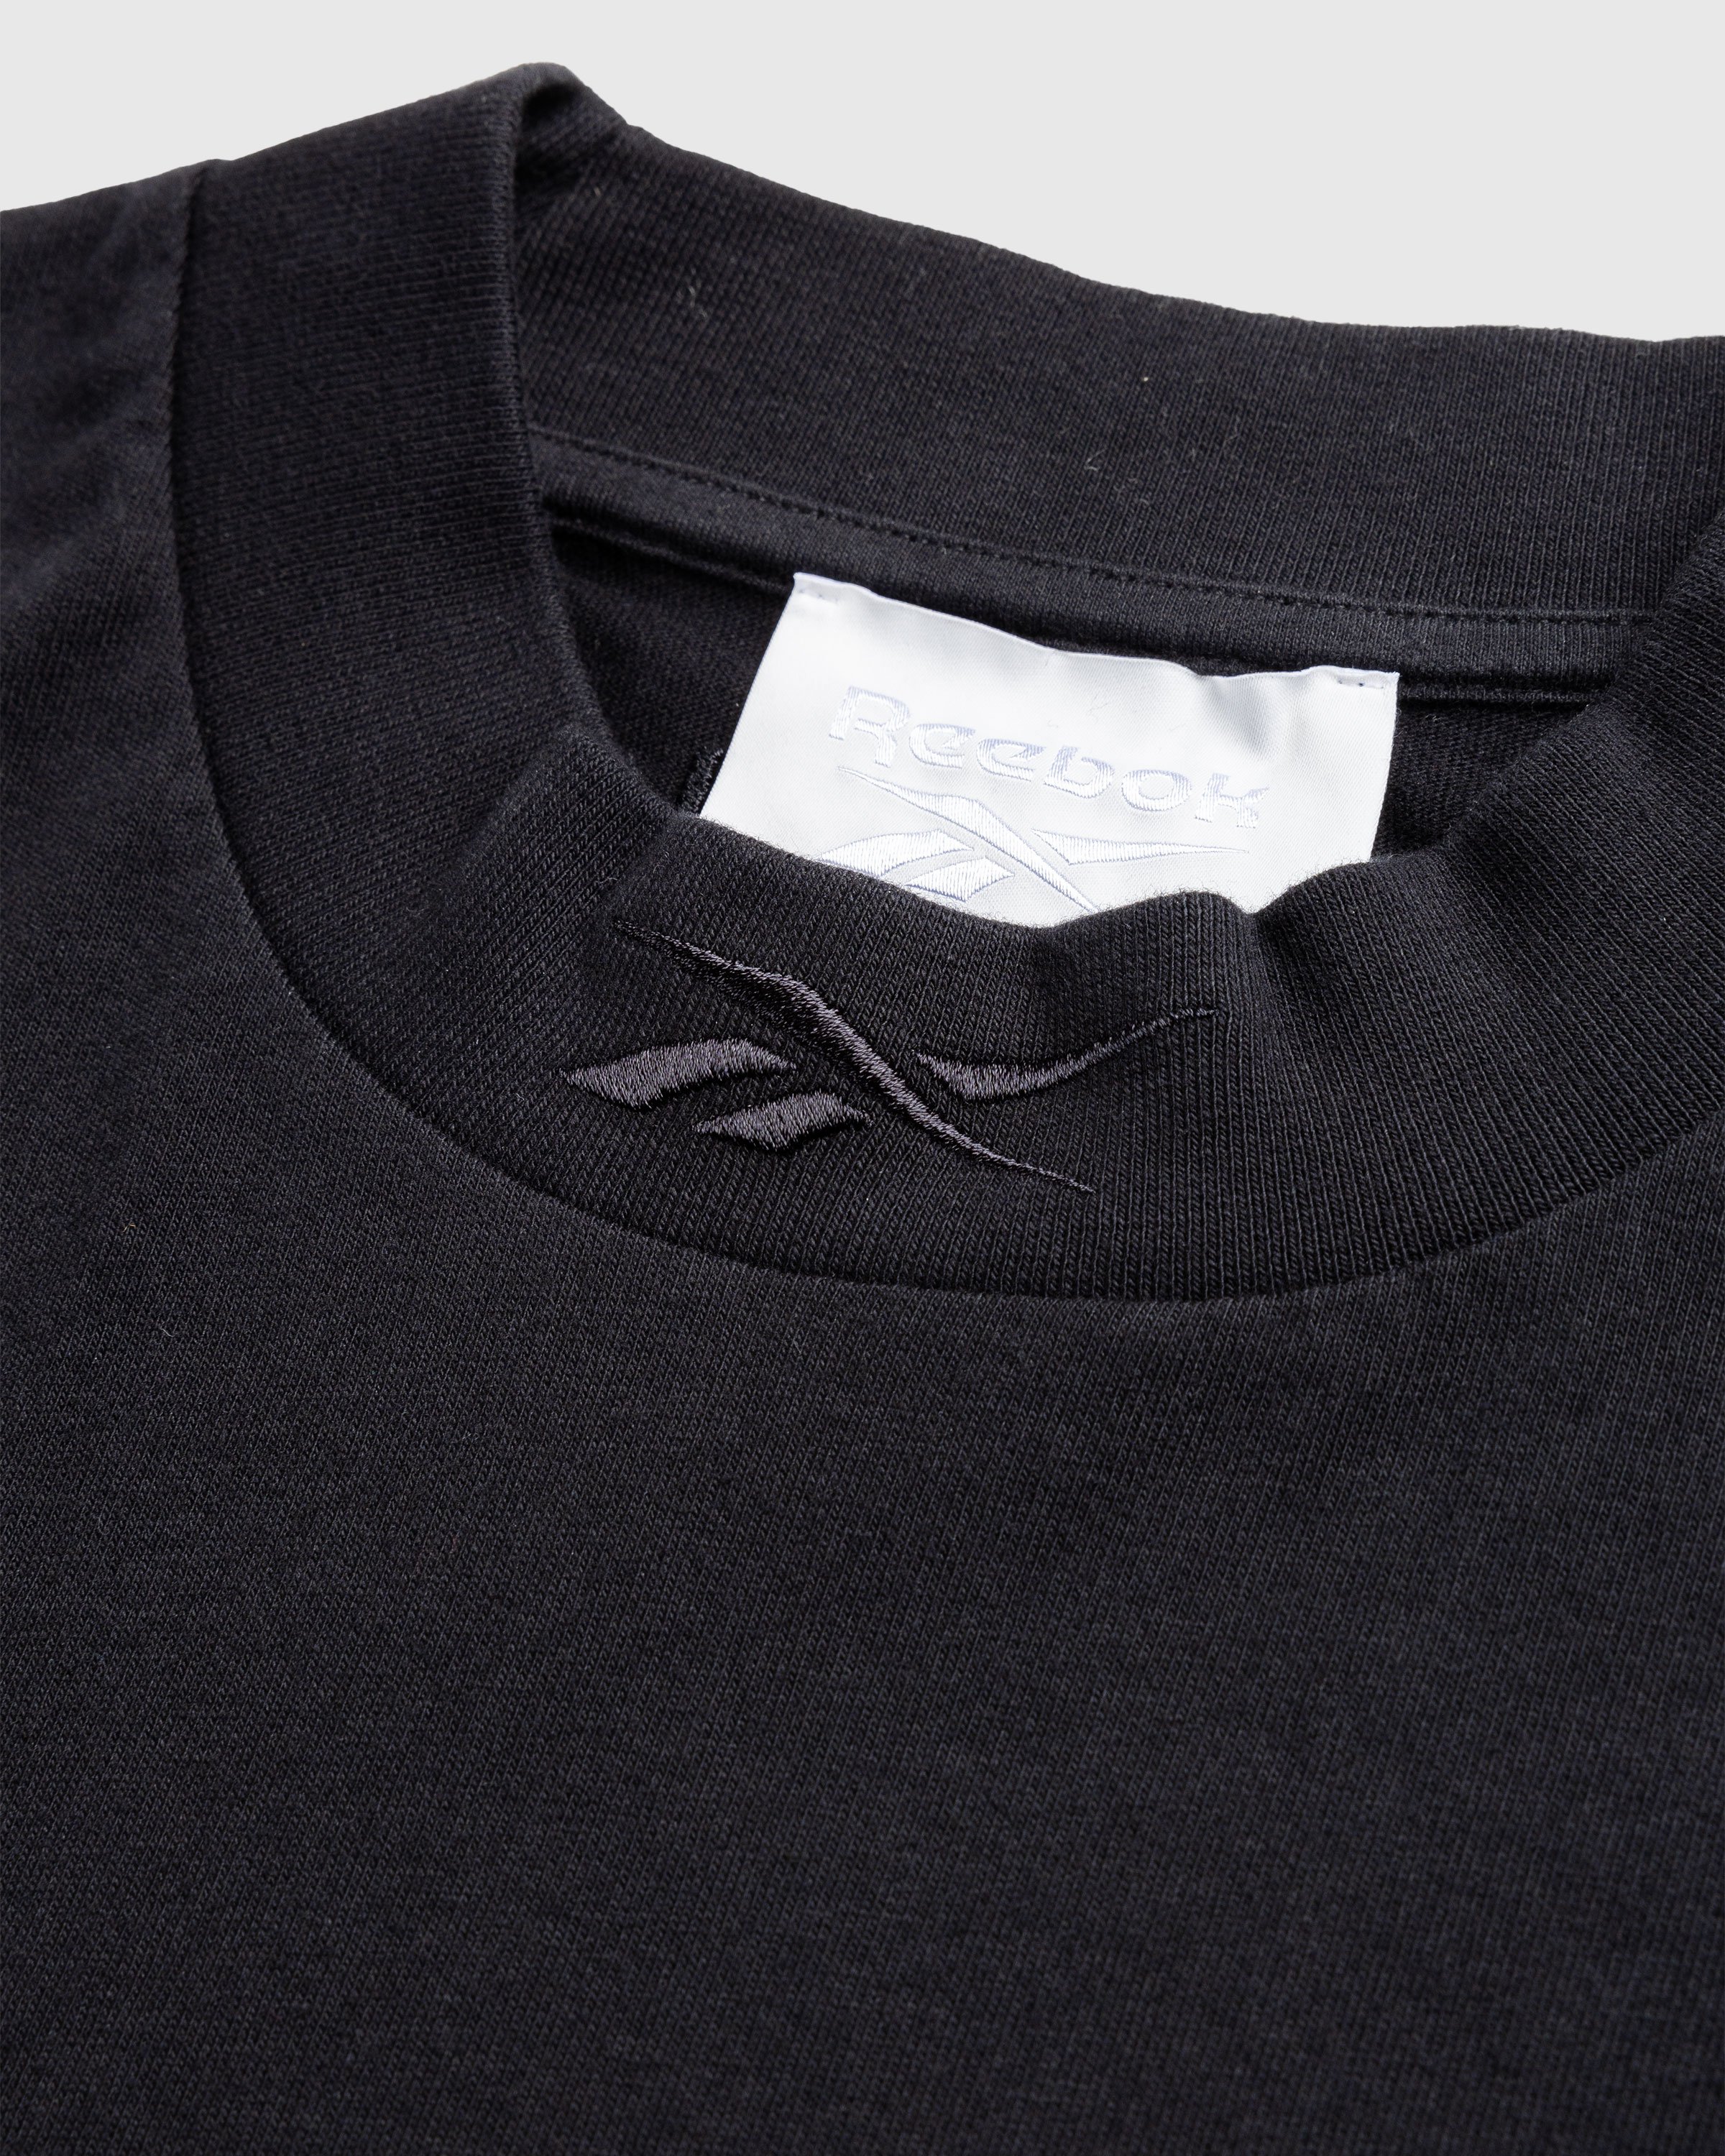 Reebok - Piped T-Shirt Black - Clothing - Black - Image 5